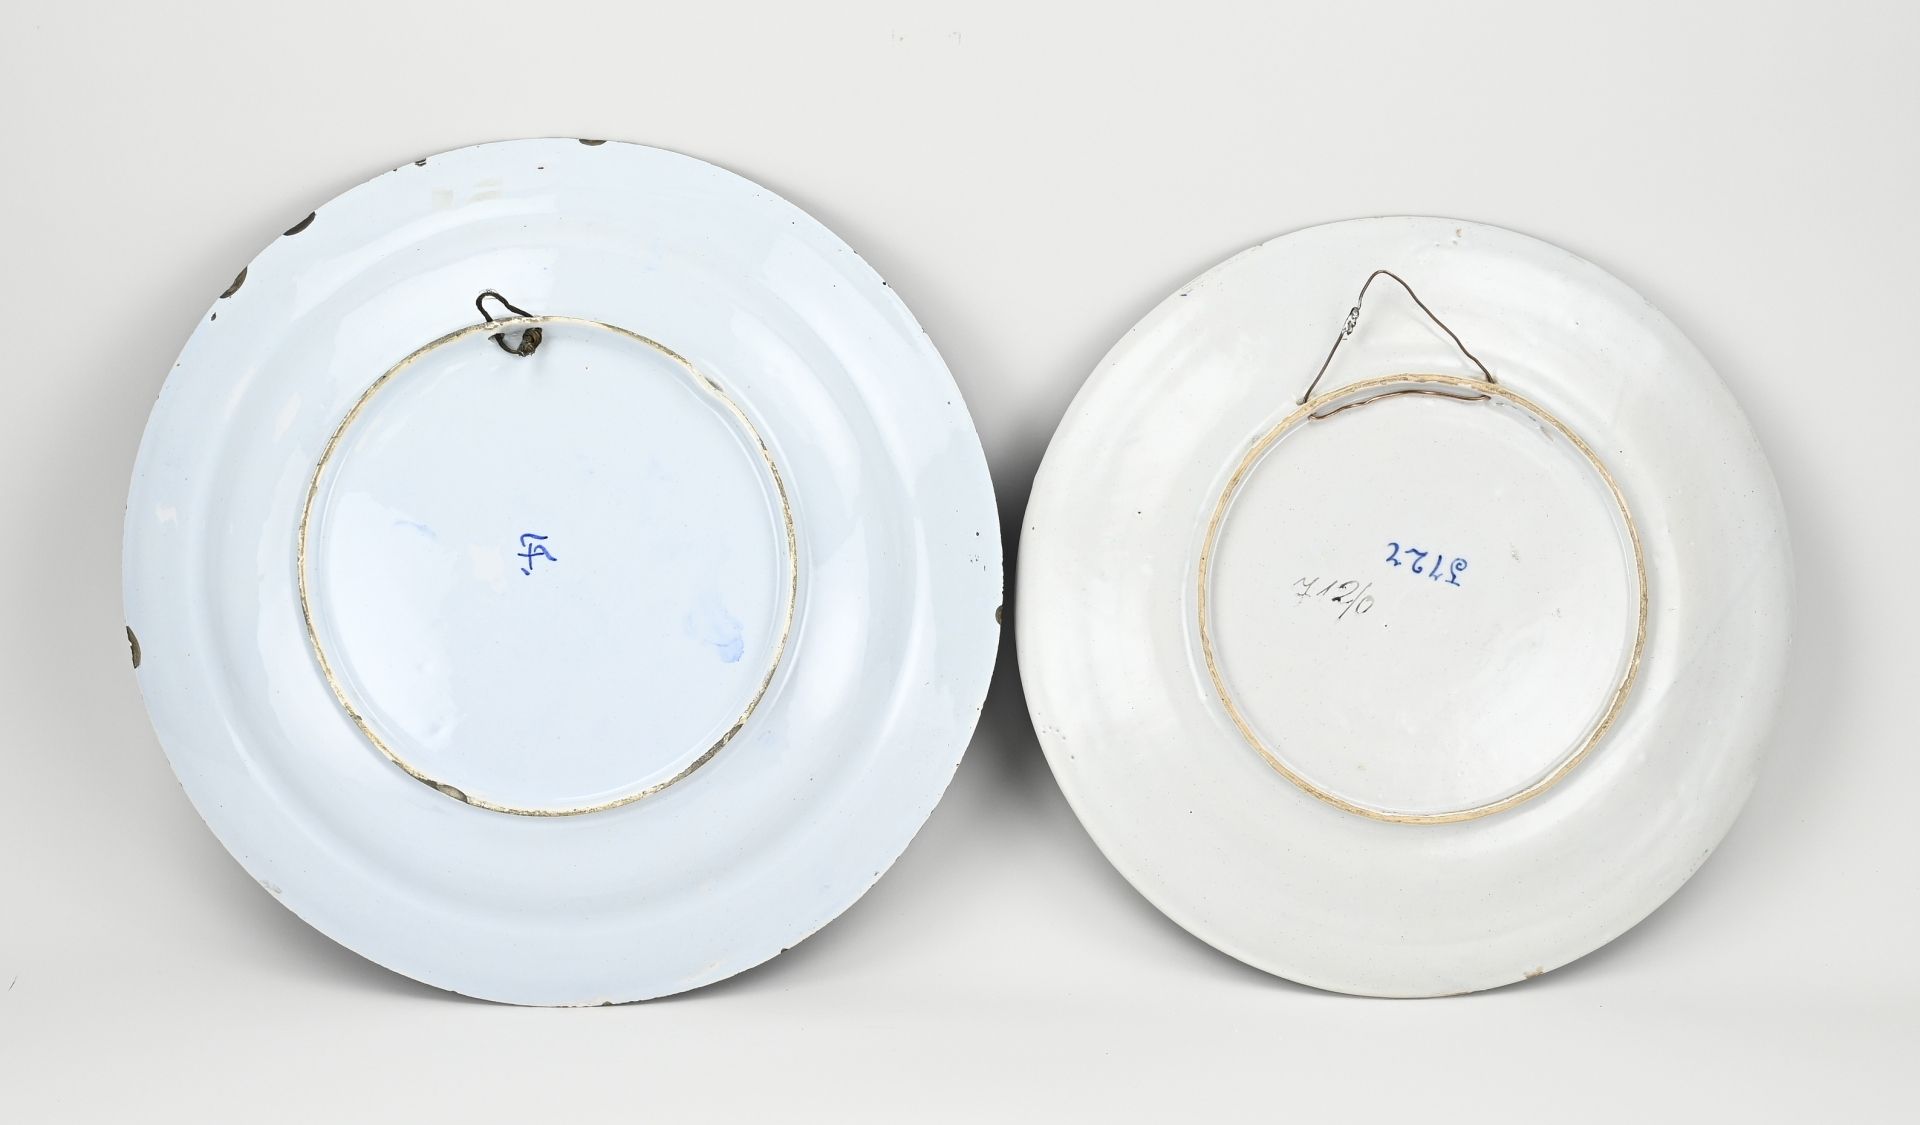 2x Dutch fayence wall plates Ã˜ 34.5 - Ã˜ 38 cm. - Image 2 of 2